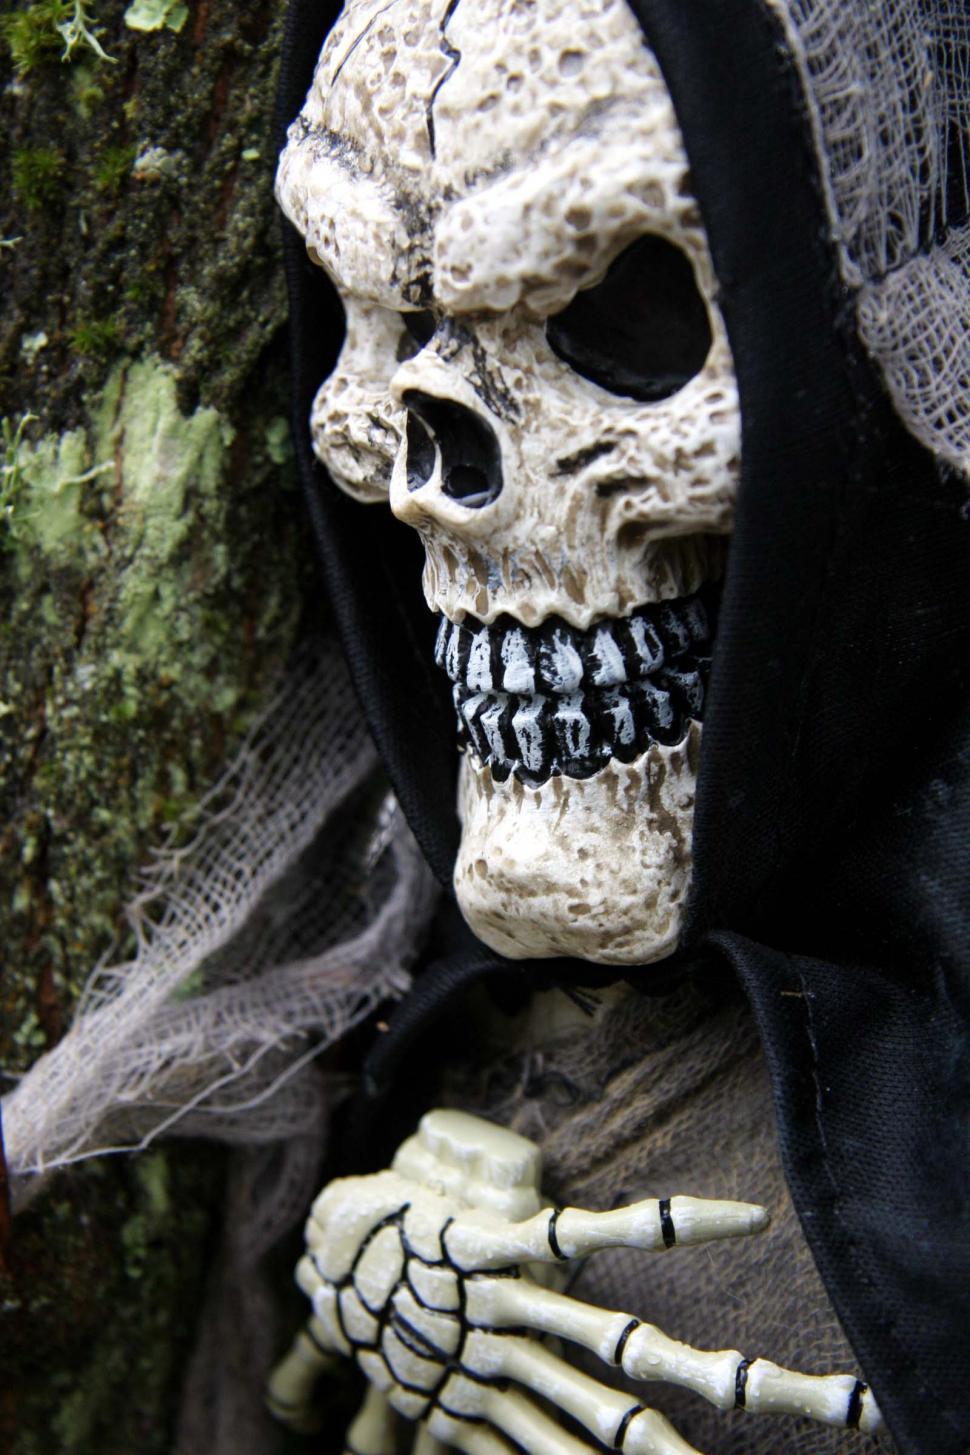 Free Image of Skeleton Wearing Black Hooded Jacket and Veil 